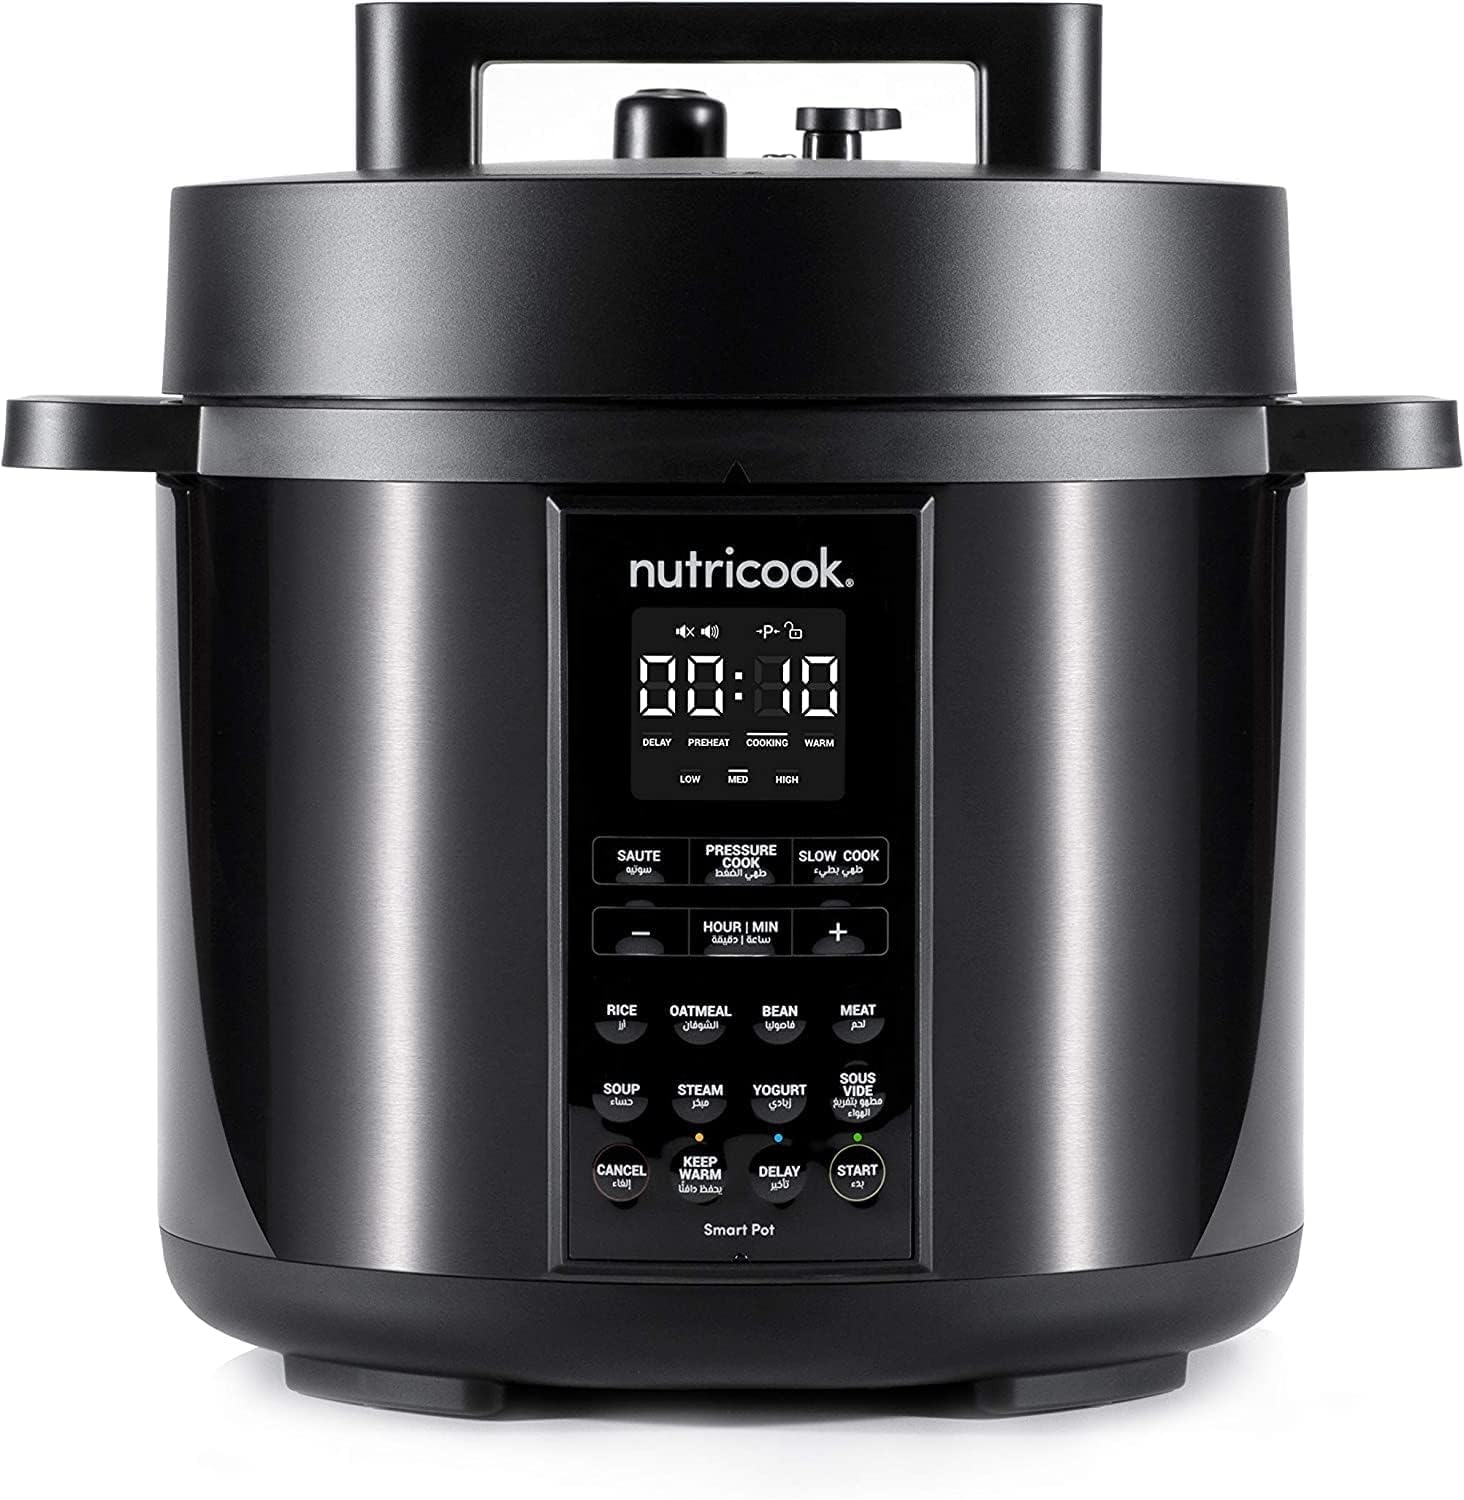 Nutricook Smartpot 2 / 8L / Electric Pressure Cooker - Black